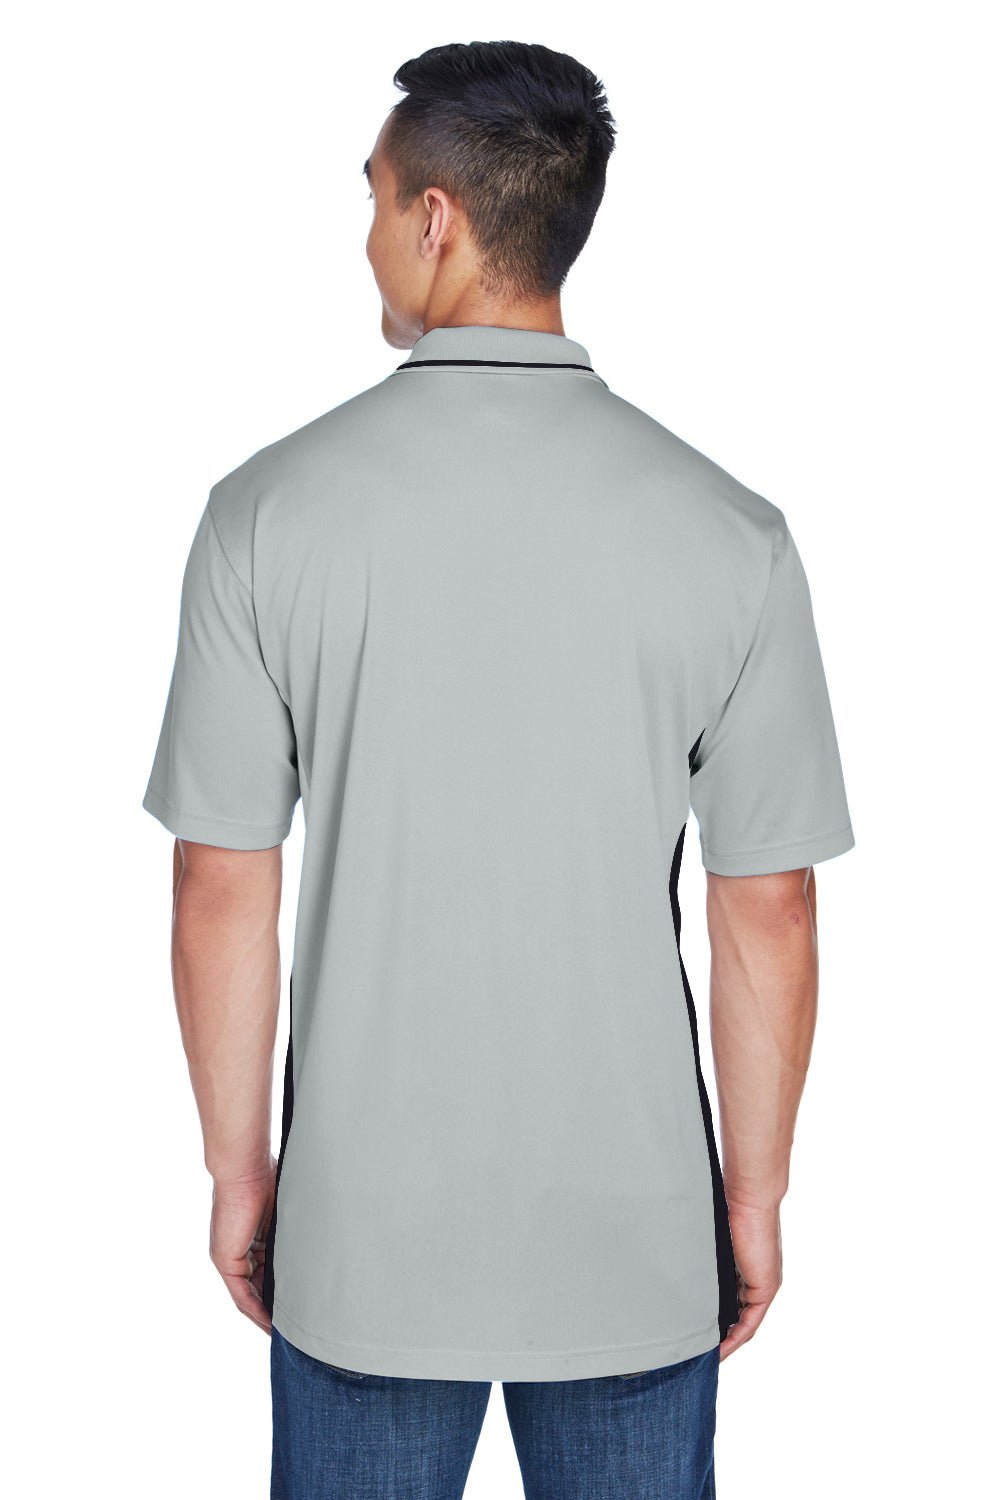 UltraClub 8406 Mens Cool & Dry Moisture Wicking Short Sleeve Polo Shirt Grey/Black Back